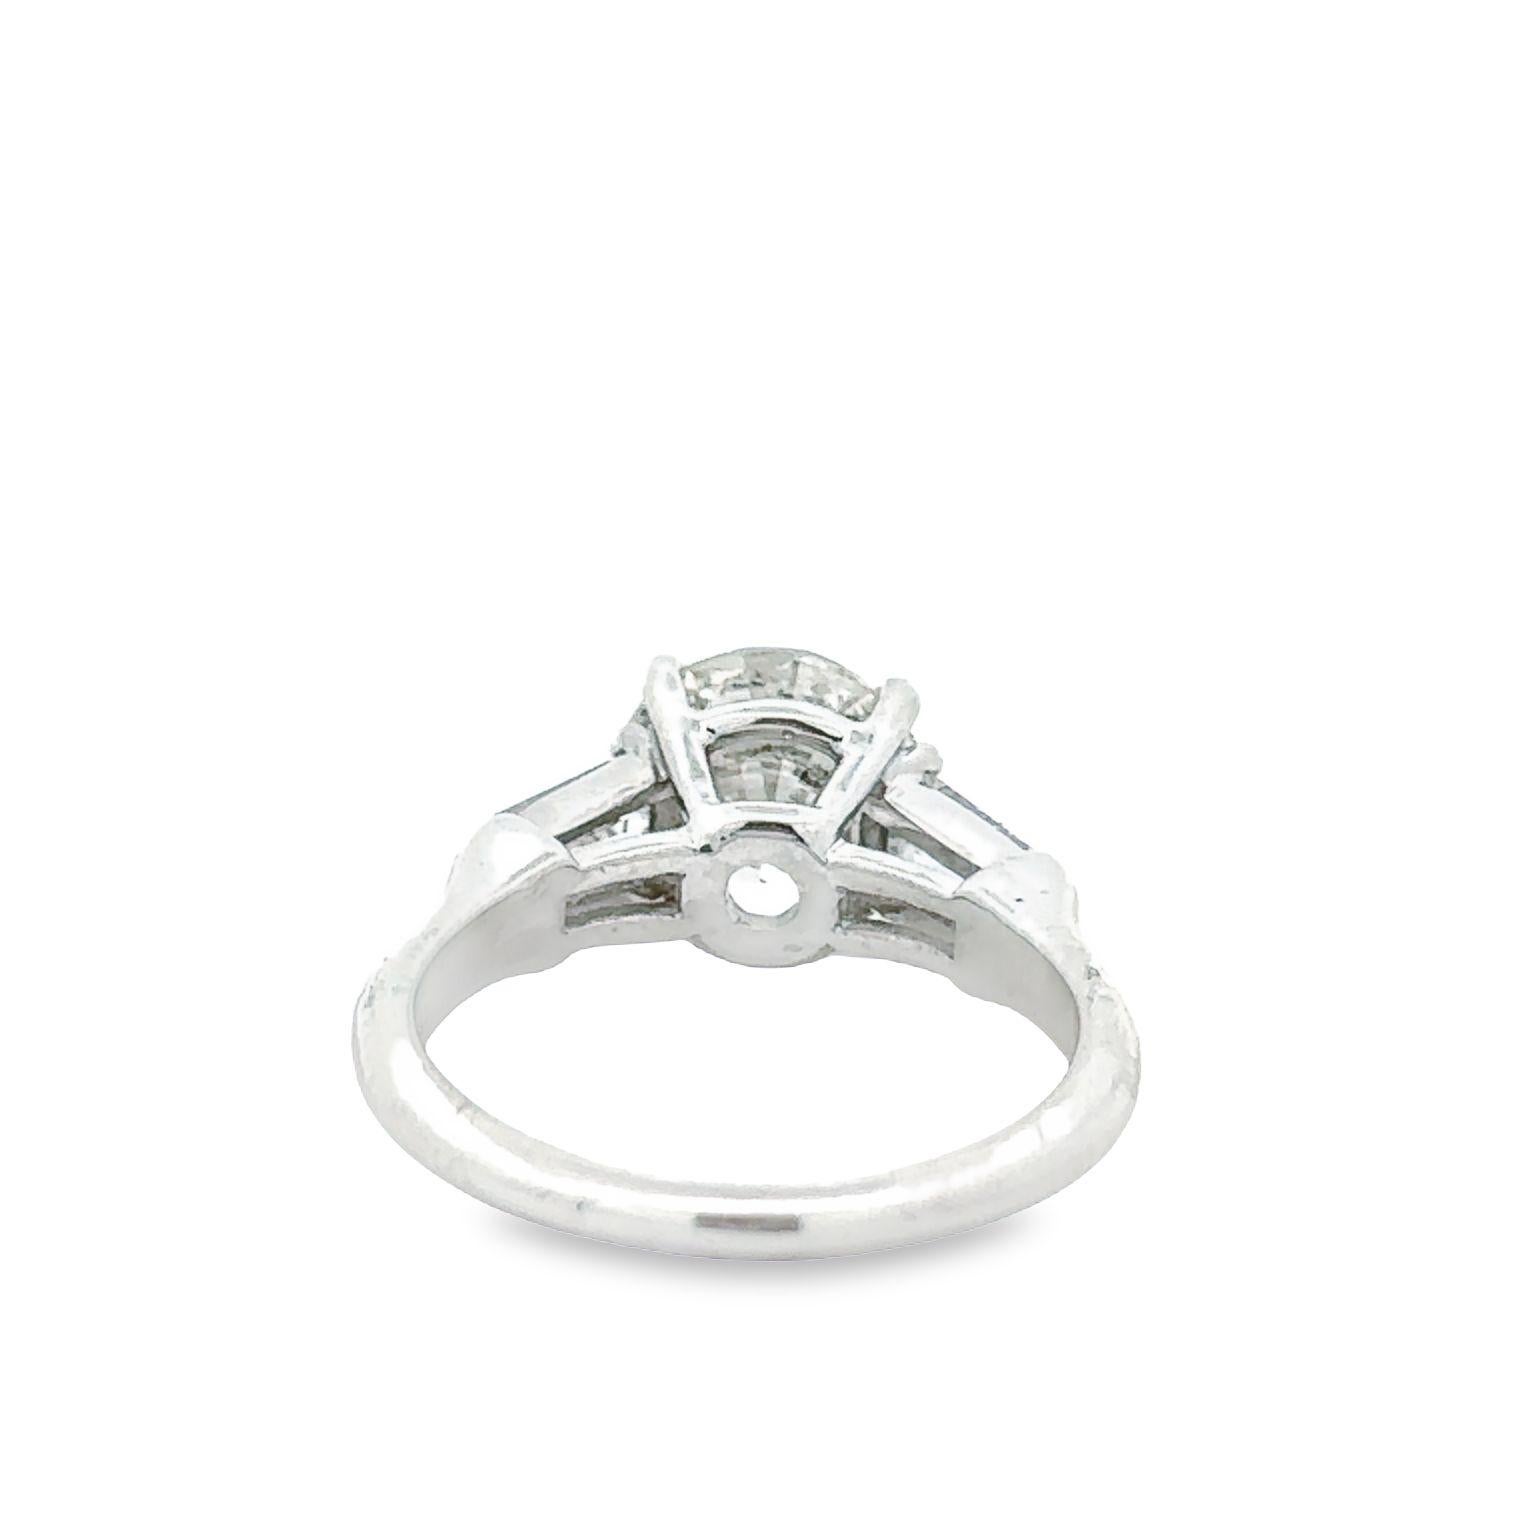 Round Cut 2.51 Carat Round Brilliant Cut Diamond Engagement Ring For Sale